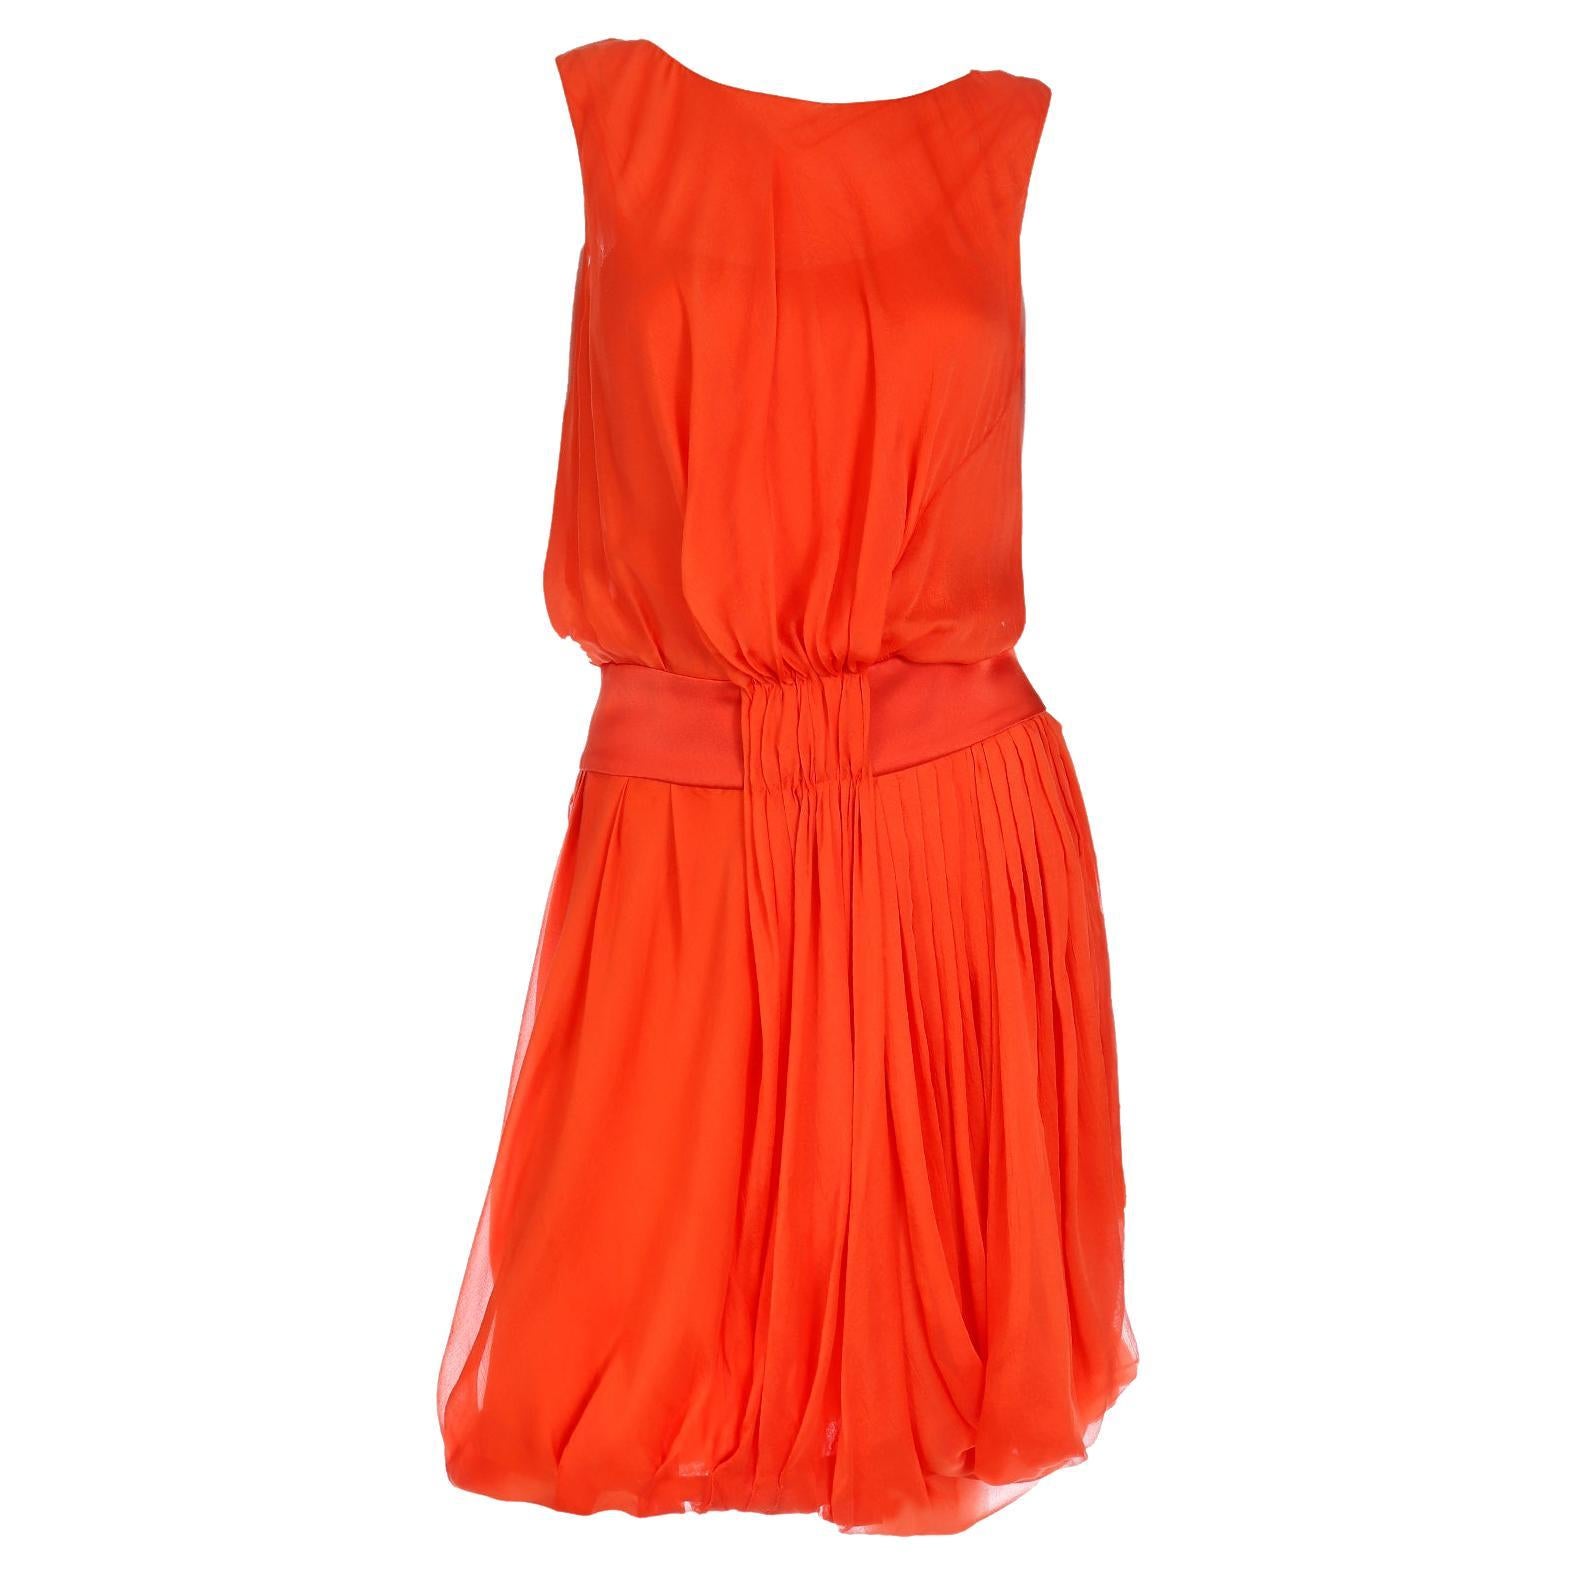 Vintage Fine Silk Chiffon Orange Sleeveless Dress With Satin Waistband For Sale